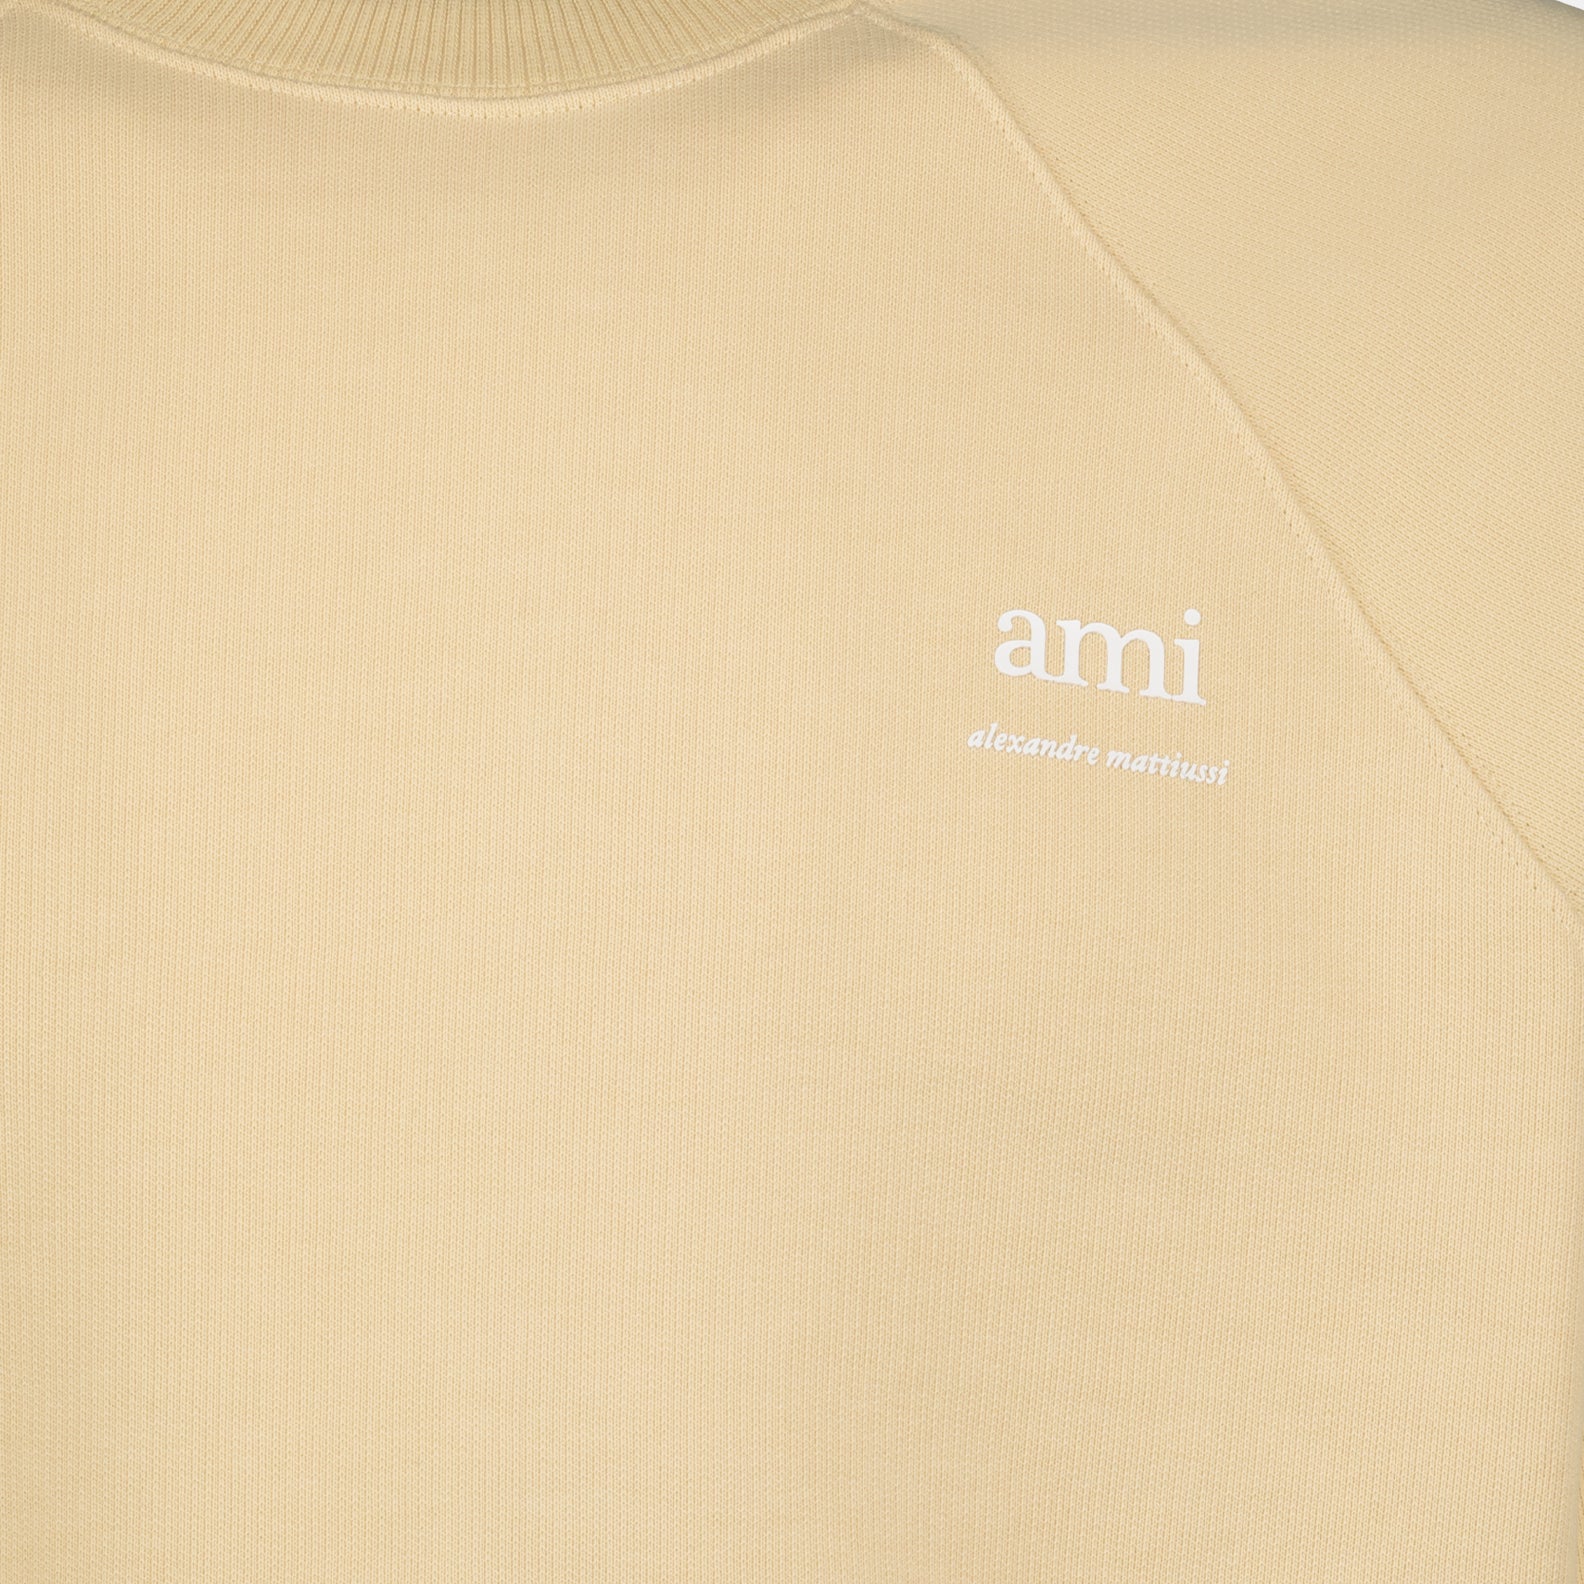 Embroidered Ami sweatshirt